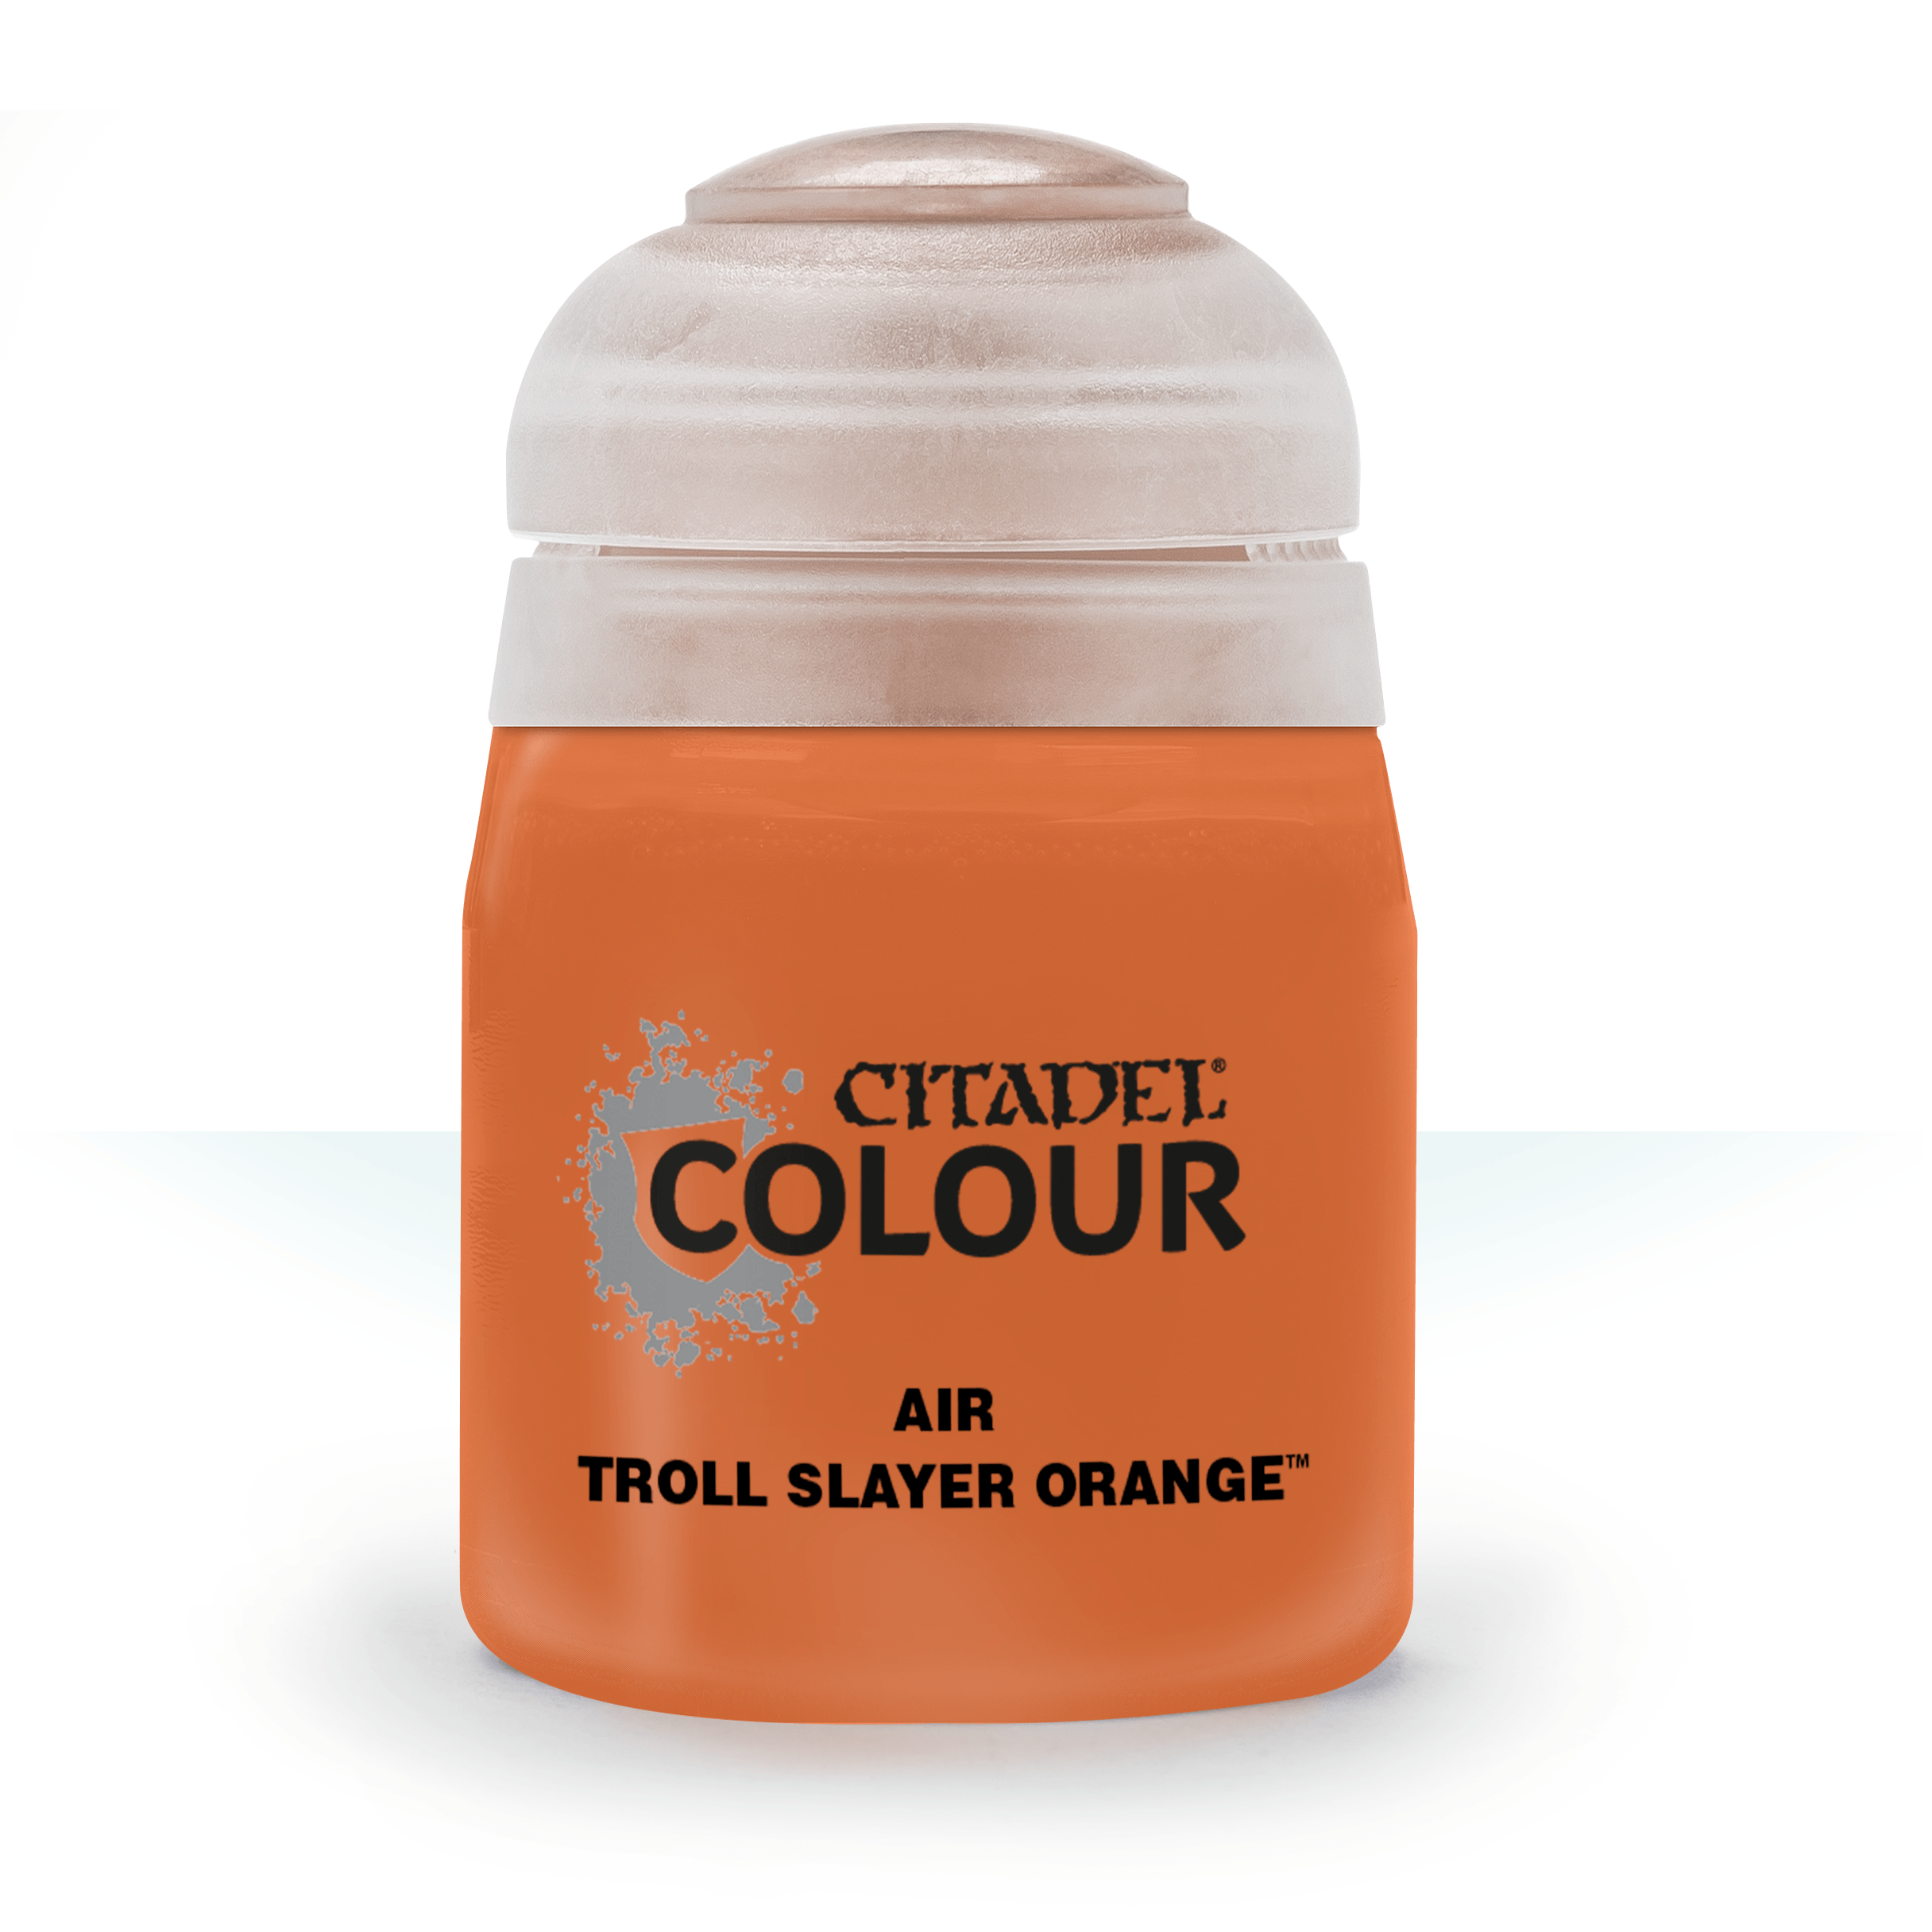 Troll Slayer Orange - Citadel Air Colour